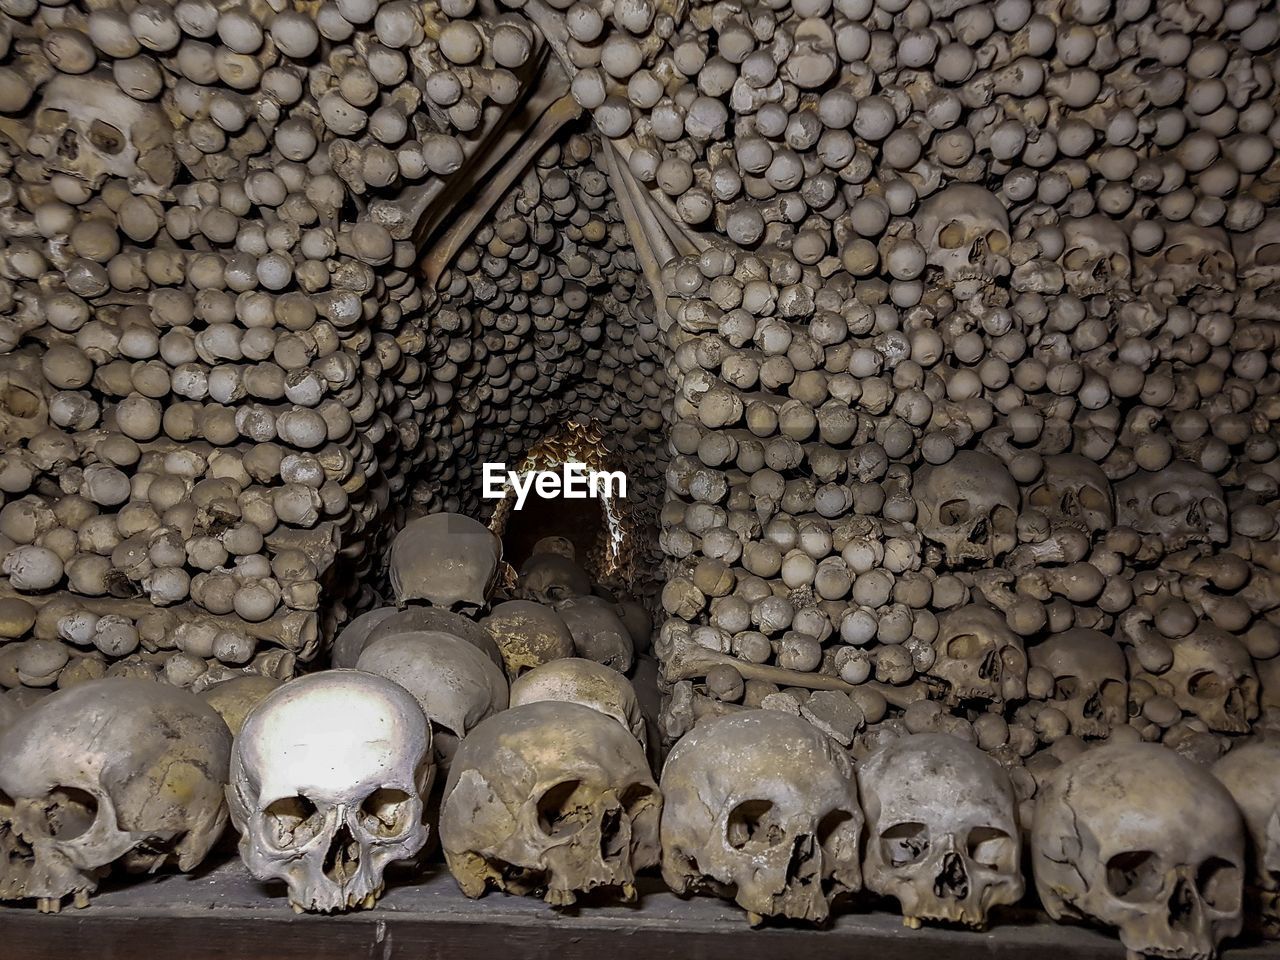 Human skulls against patterned wall